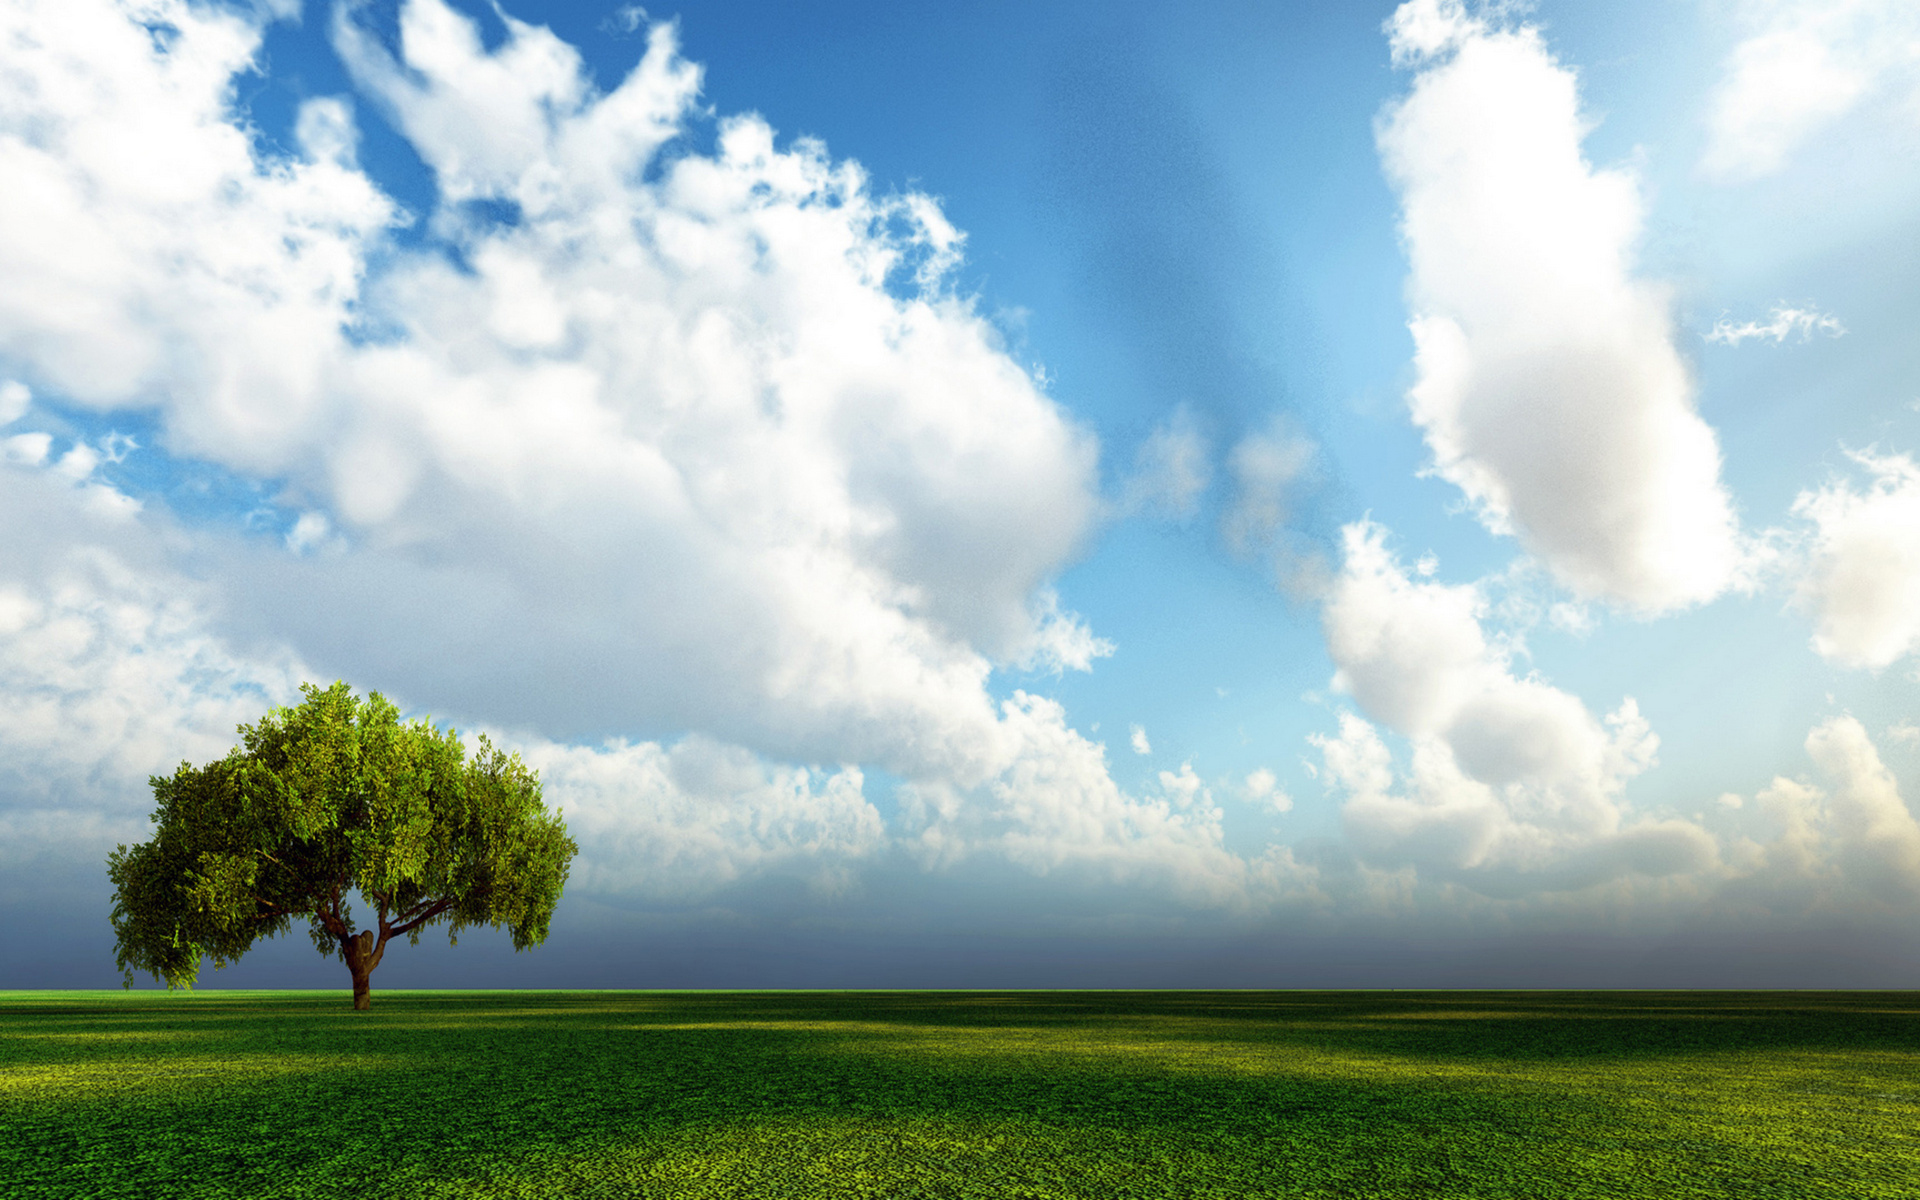 Beautiful Sky Over Tree In Field HD Wallpaper Background Image